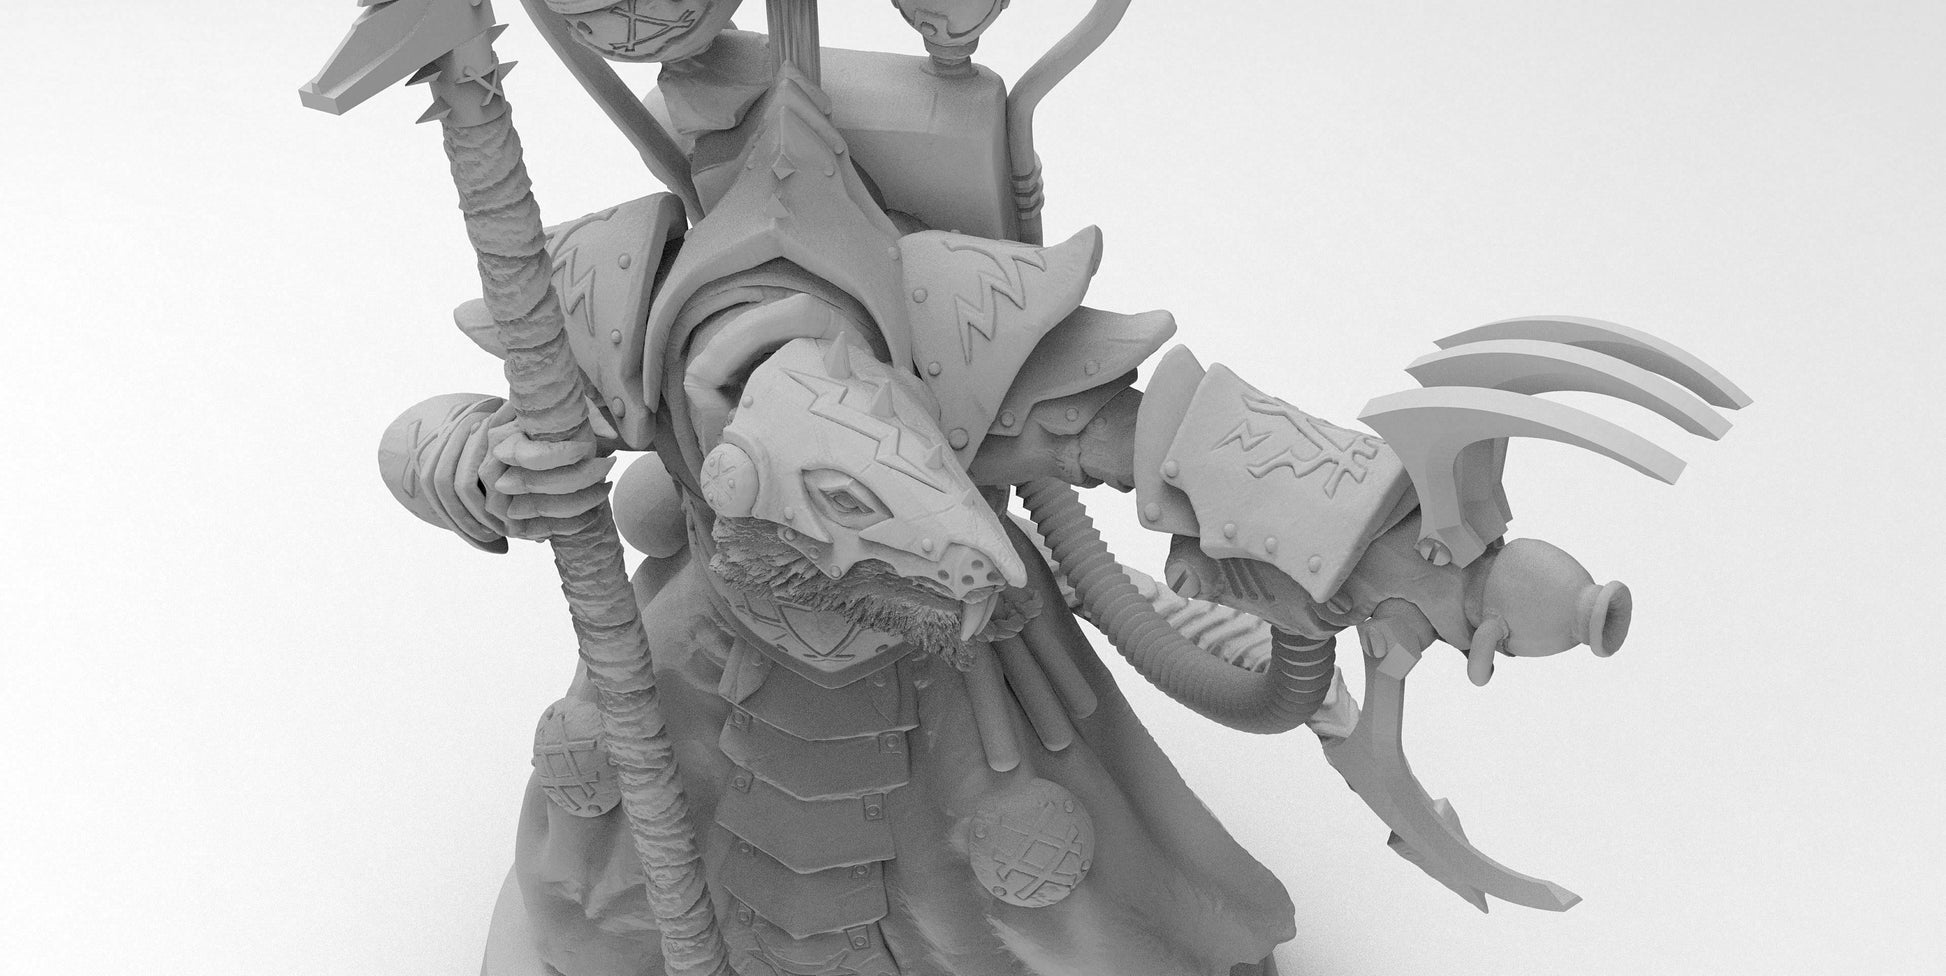 Ratmen Master Engineer | Ratmen Resin 3D Printed Miniature | Warhammer Proxy | RPG | D&D | DnD| EmanG |